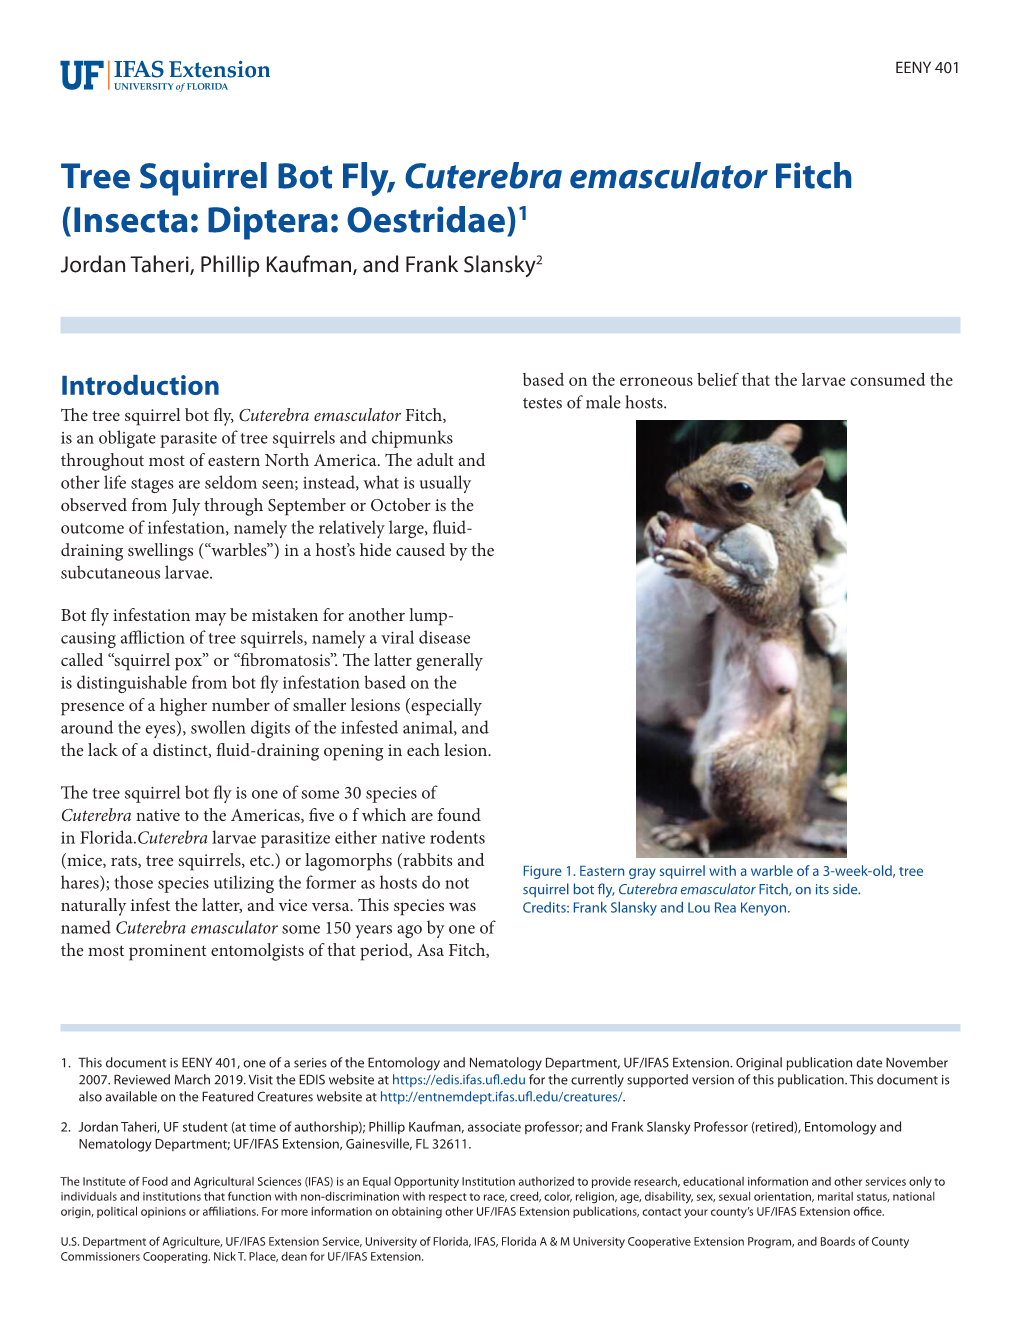 Tree Squirrel Bot Fly, Cuterebra Emasculator Fitch (Insecta: Diptera: Oestridae)1 Jordan Taheri, Phillip Kaufman, and Frank Slansky2